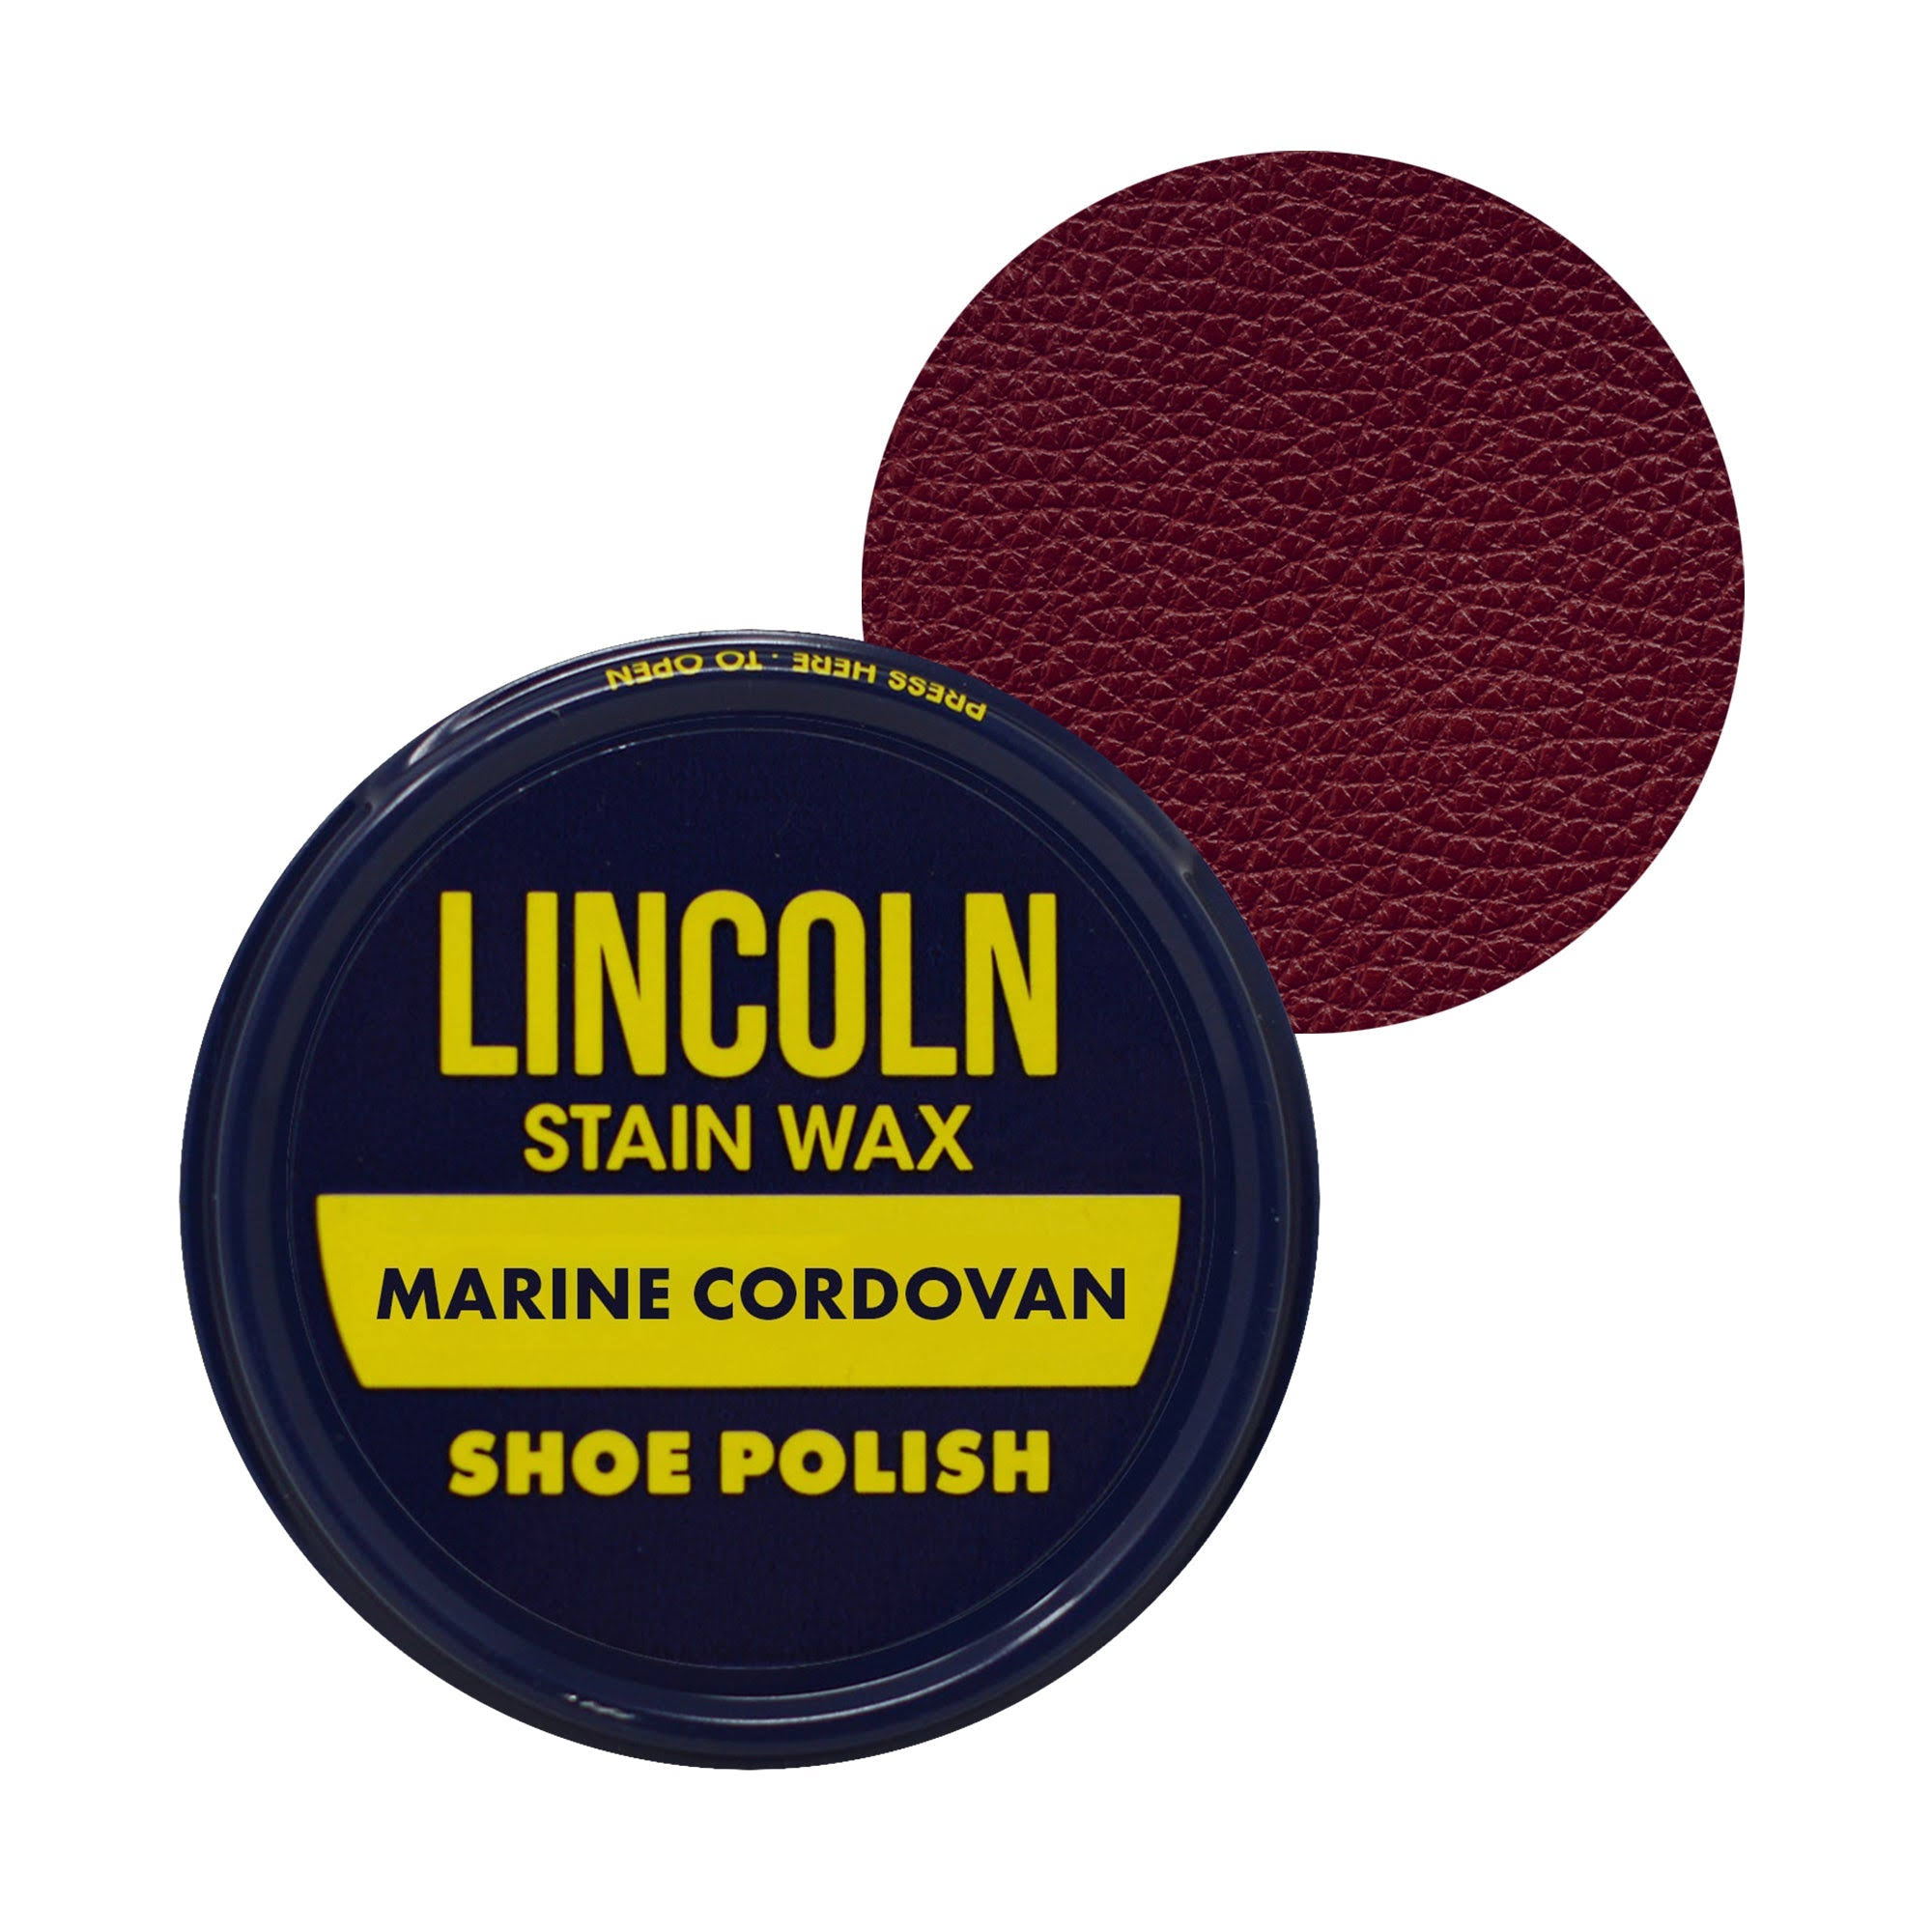 Lincoln Stain Wax Shoe Polish 3 fl oz (Marine Cordovan)